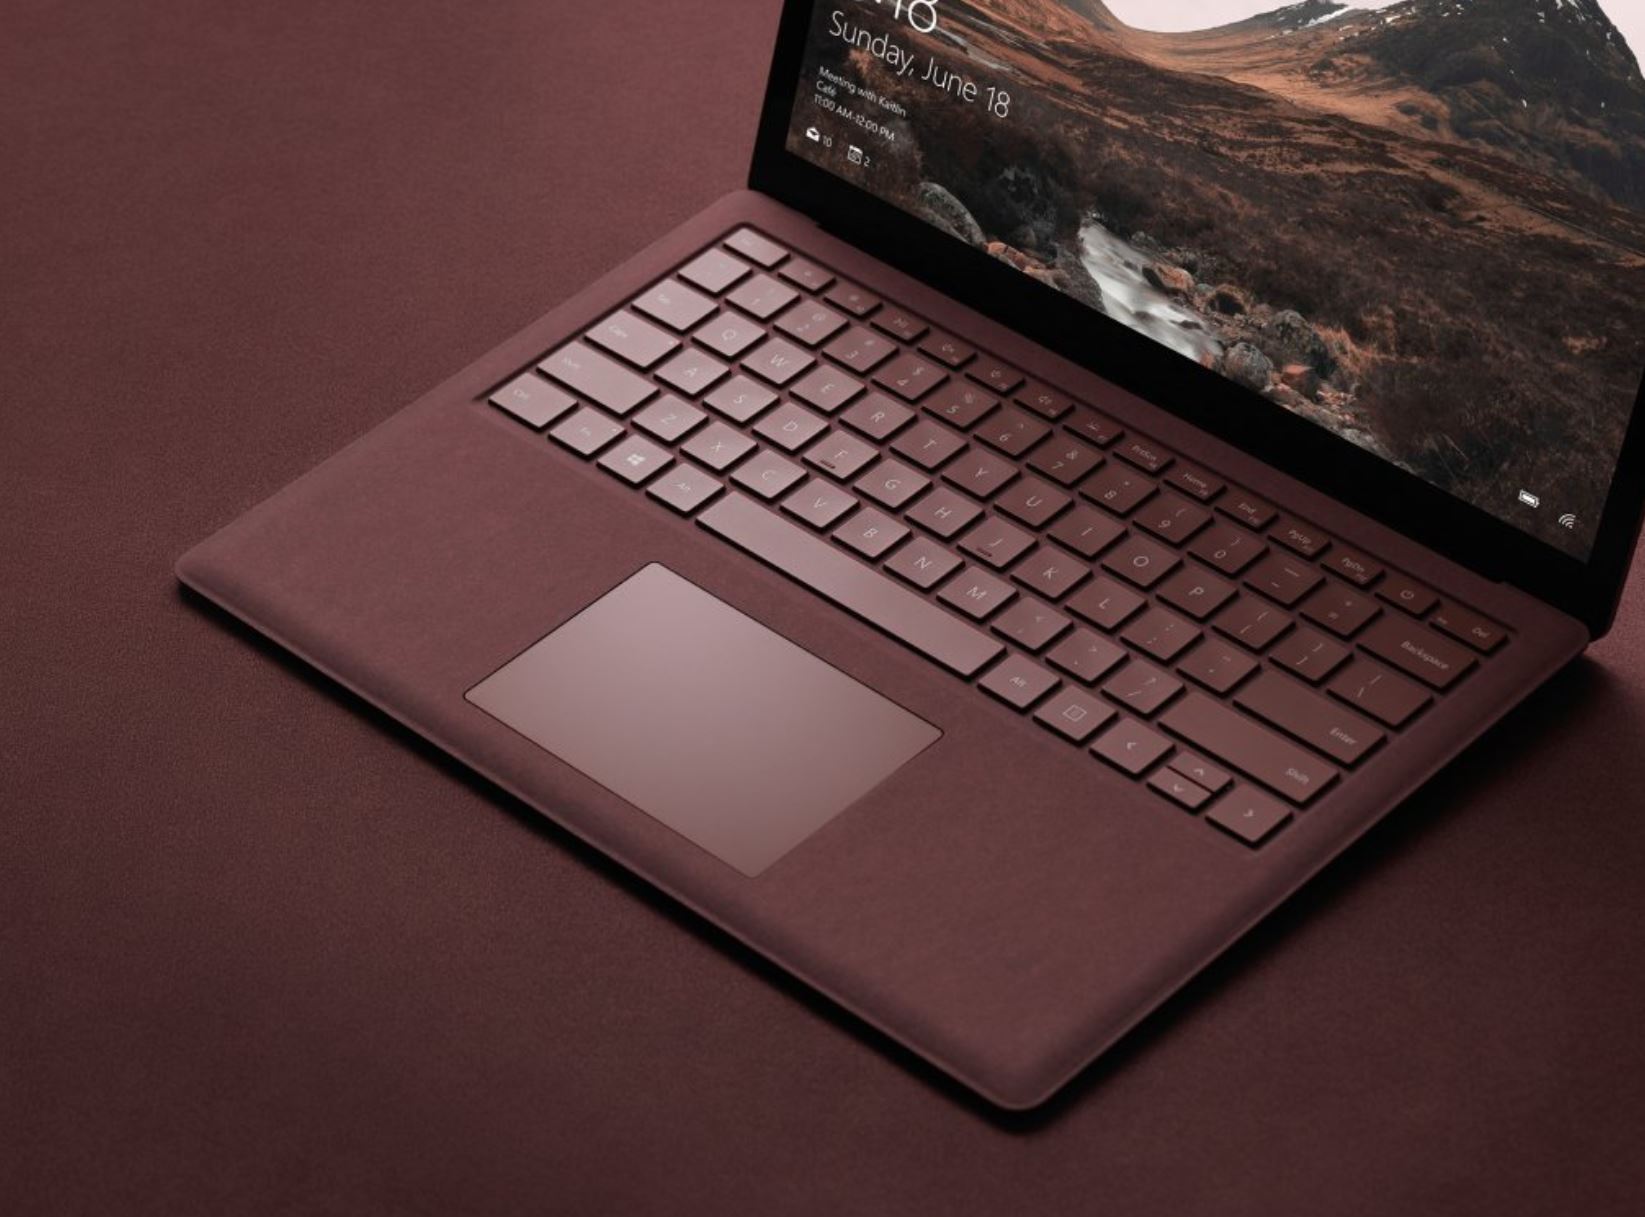 Surface Pro Surface Laptop